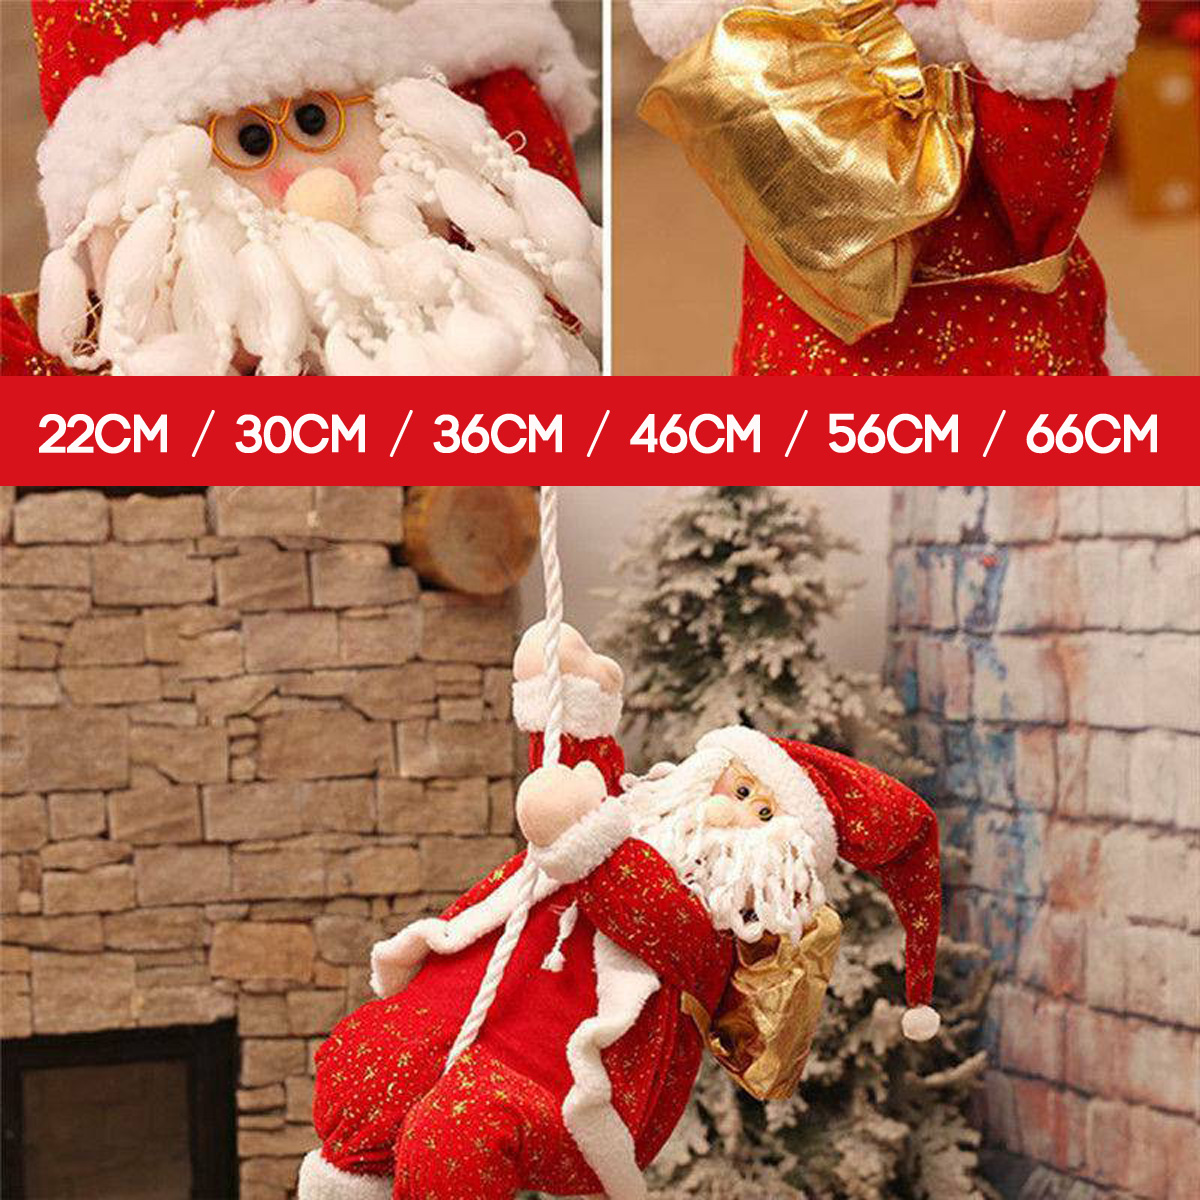 Santa-Climbing-On-Rope-Indoor-Outdoor-Christmas-Tree-Garden-Decorations-1590884-1